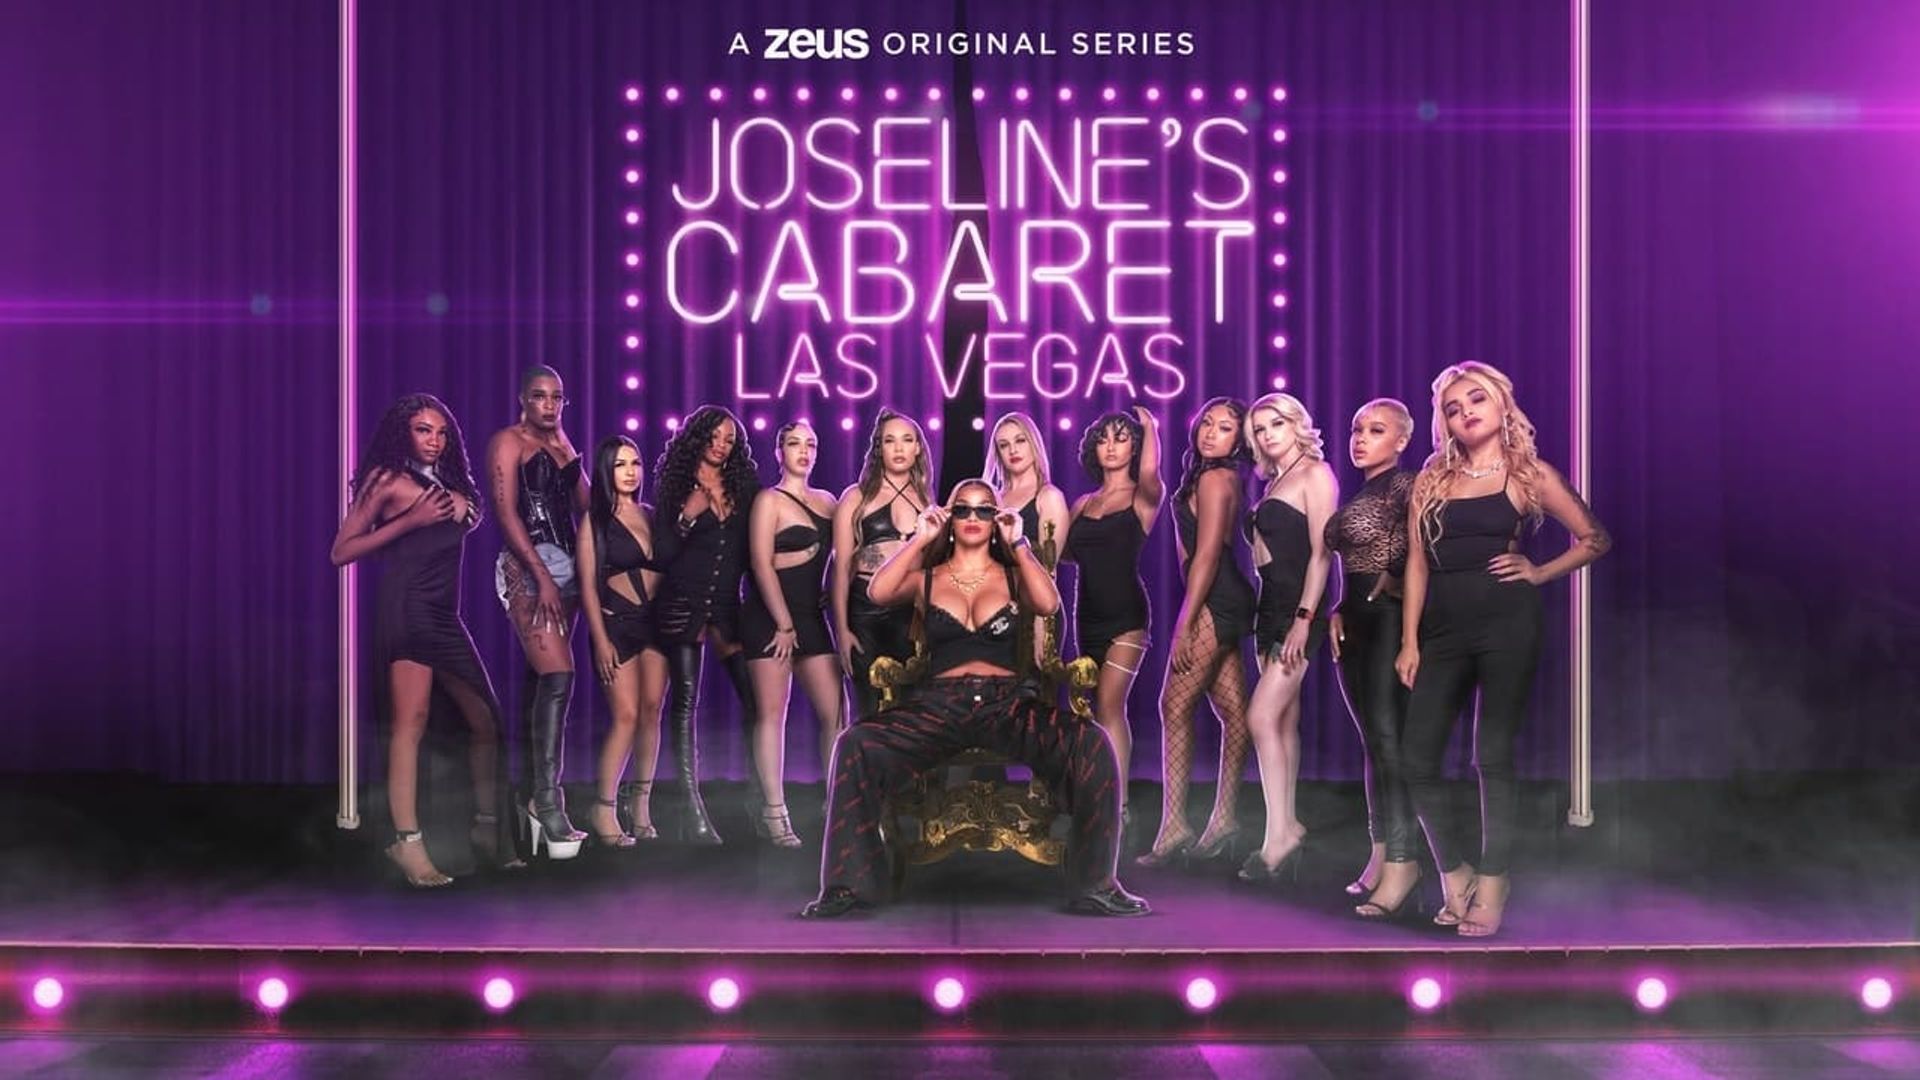 Joseline's Cabaret: Las Vegas background